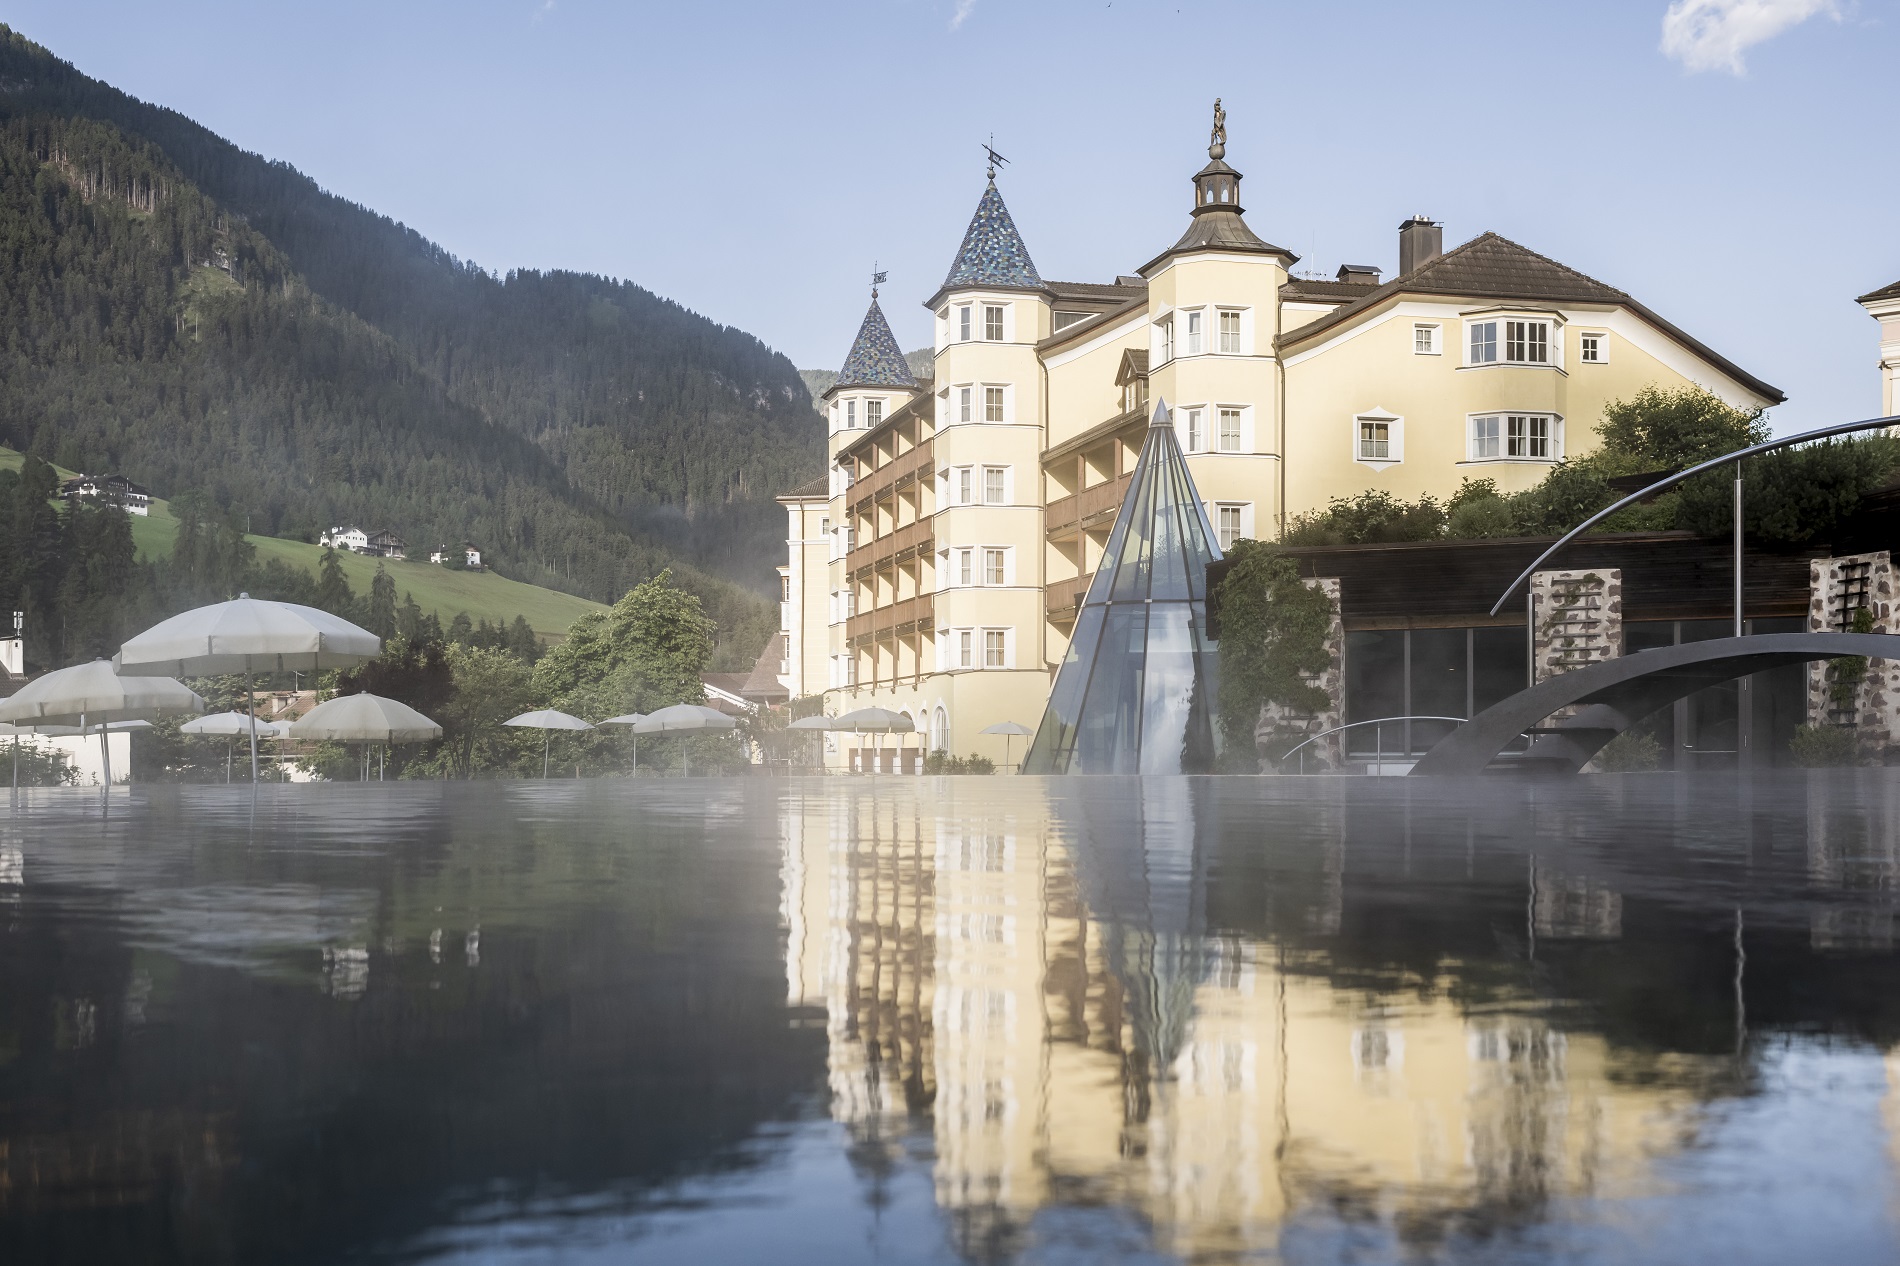  Hotel ADLER Spa Resort Dolomiti 39046 St. Ulrich/Gröden - Grödental - Dolomiten in Südtirol
